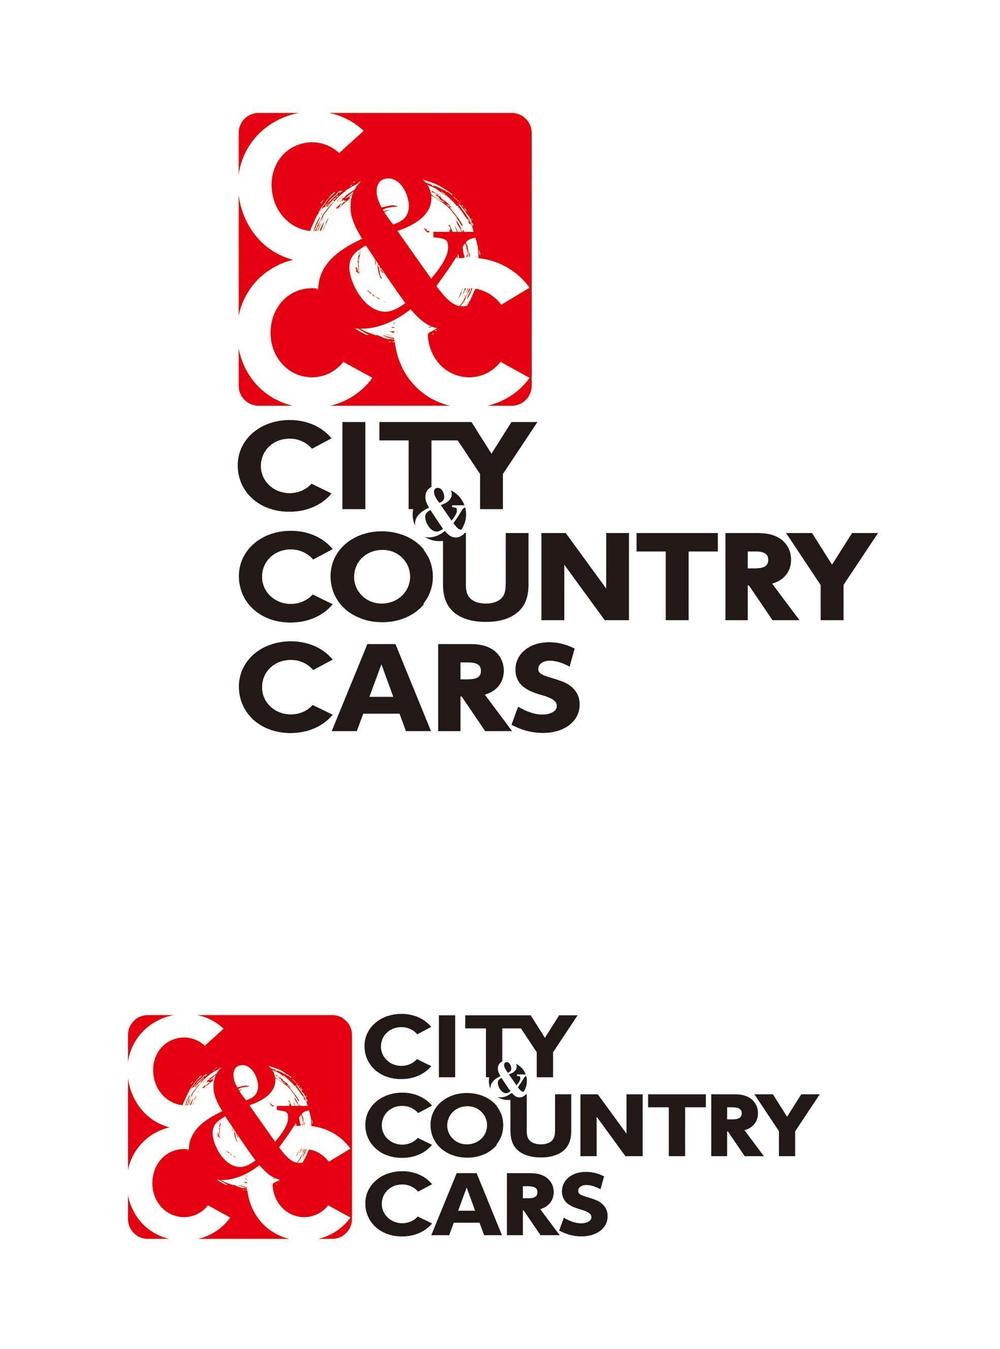 CITY & COUNTRY CARSズロゴ.jpg